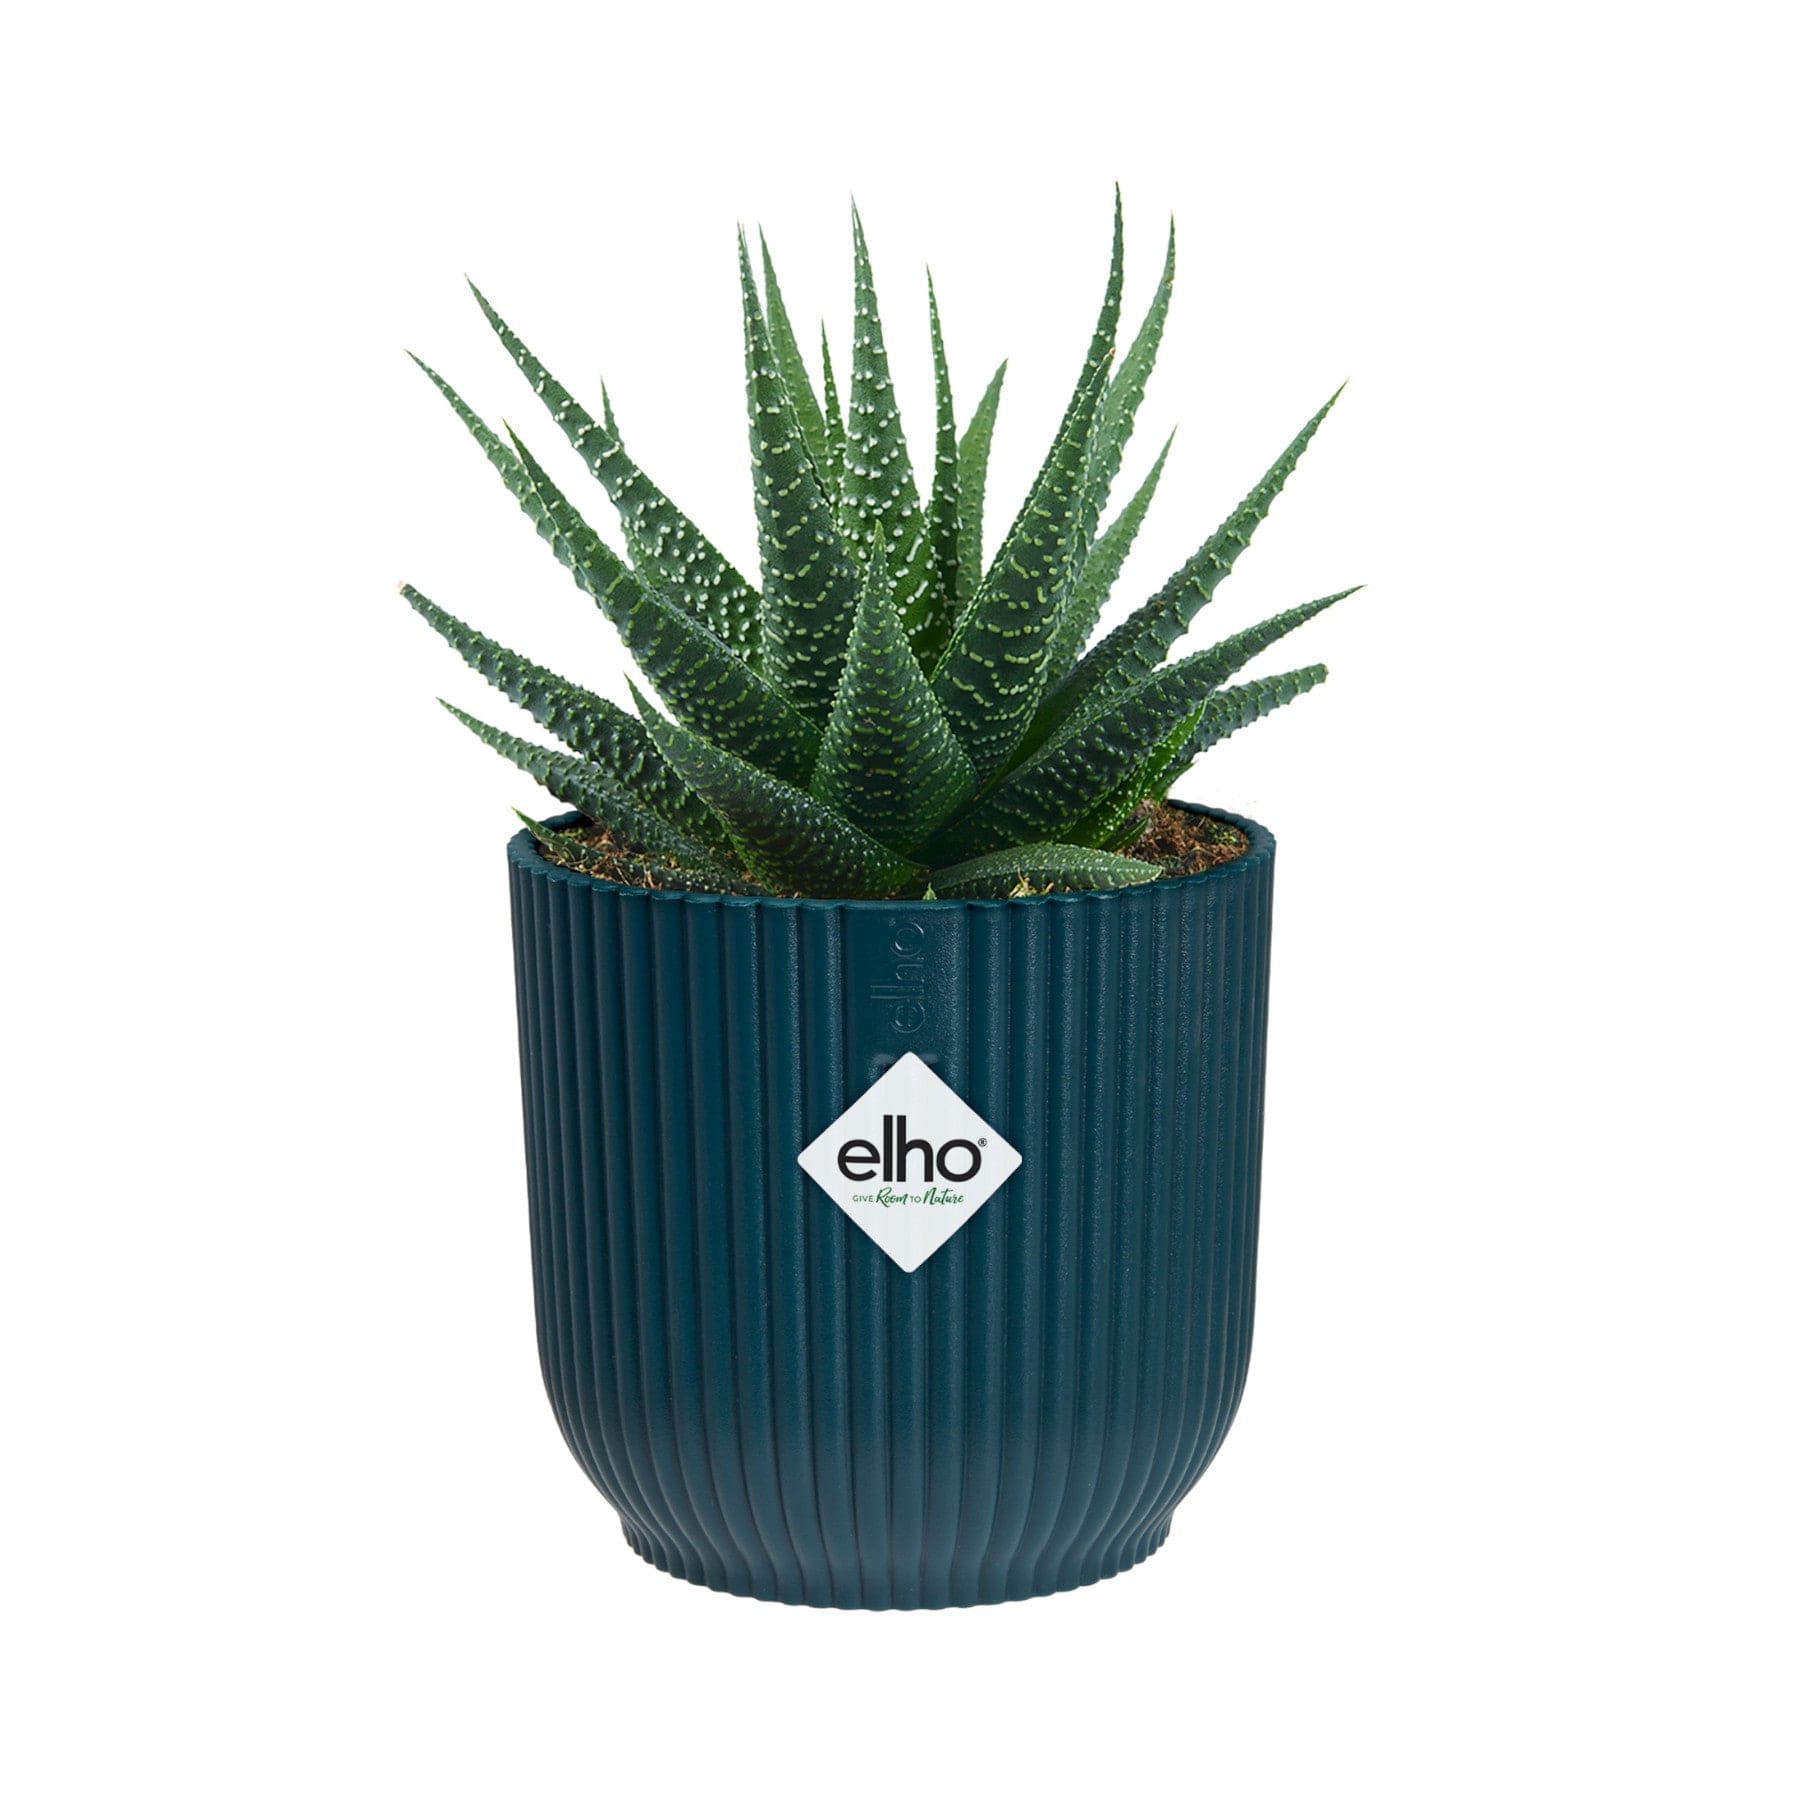 Aloe vera plant in textured blue Elho branded pot isolated on white background